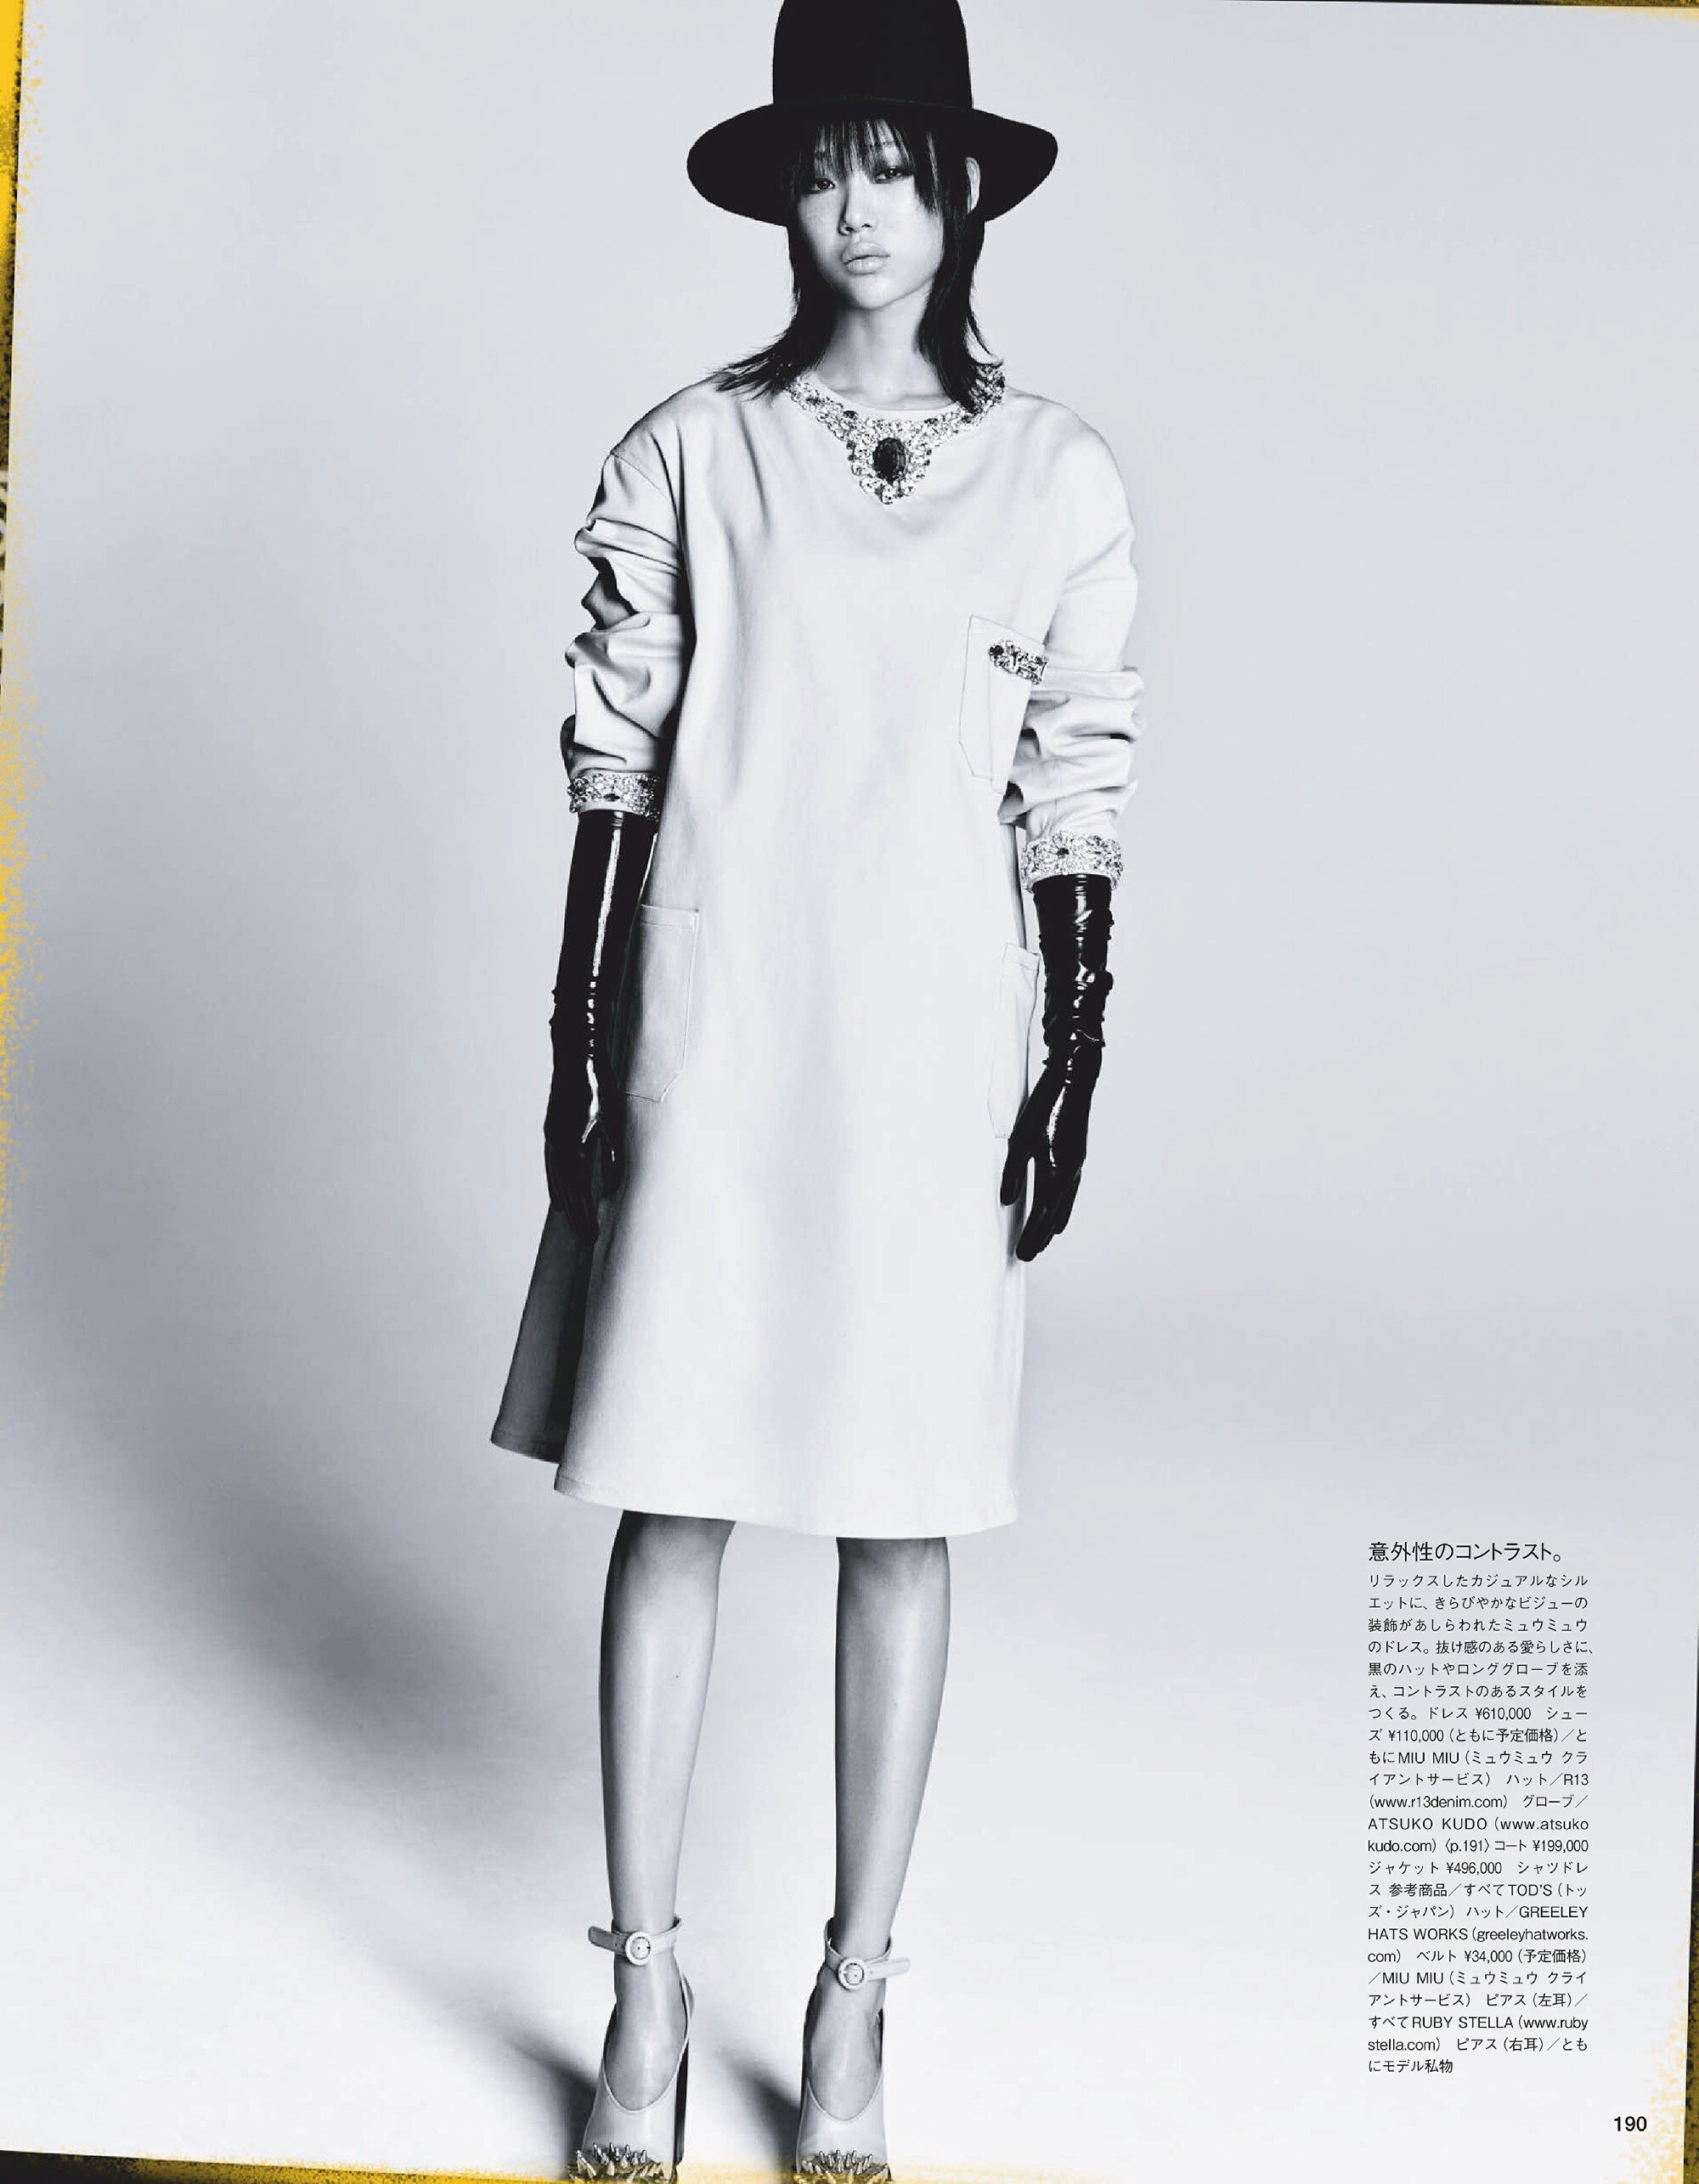 Luigi Iango 'Sketch Book Style' in Vogue Japan Oct 2020 (4).jpg